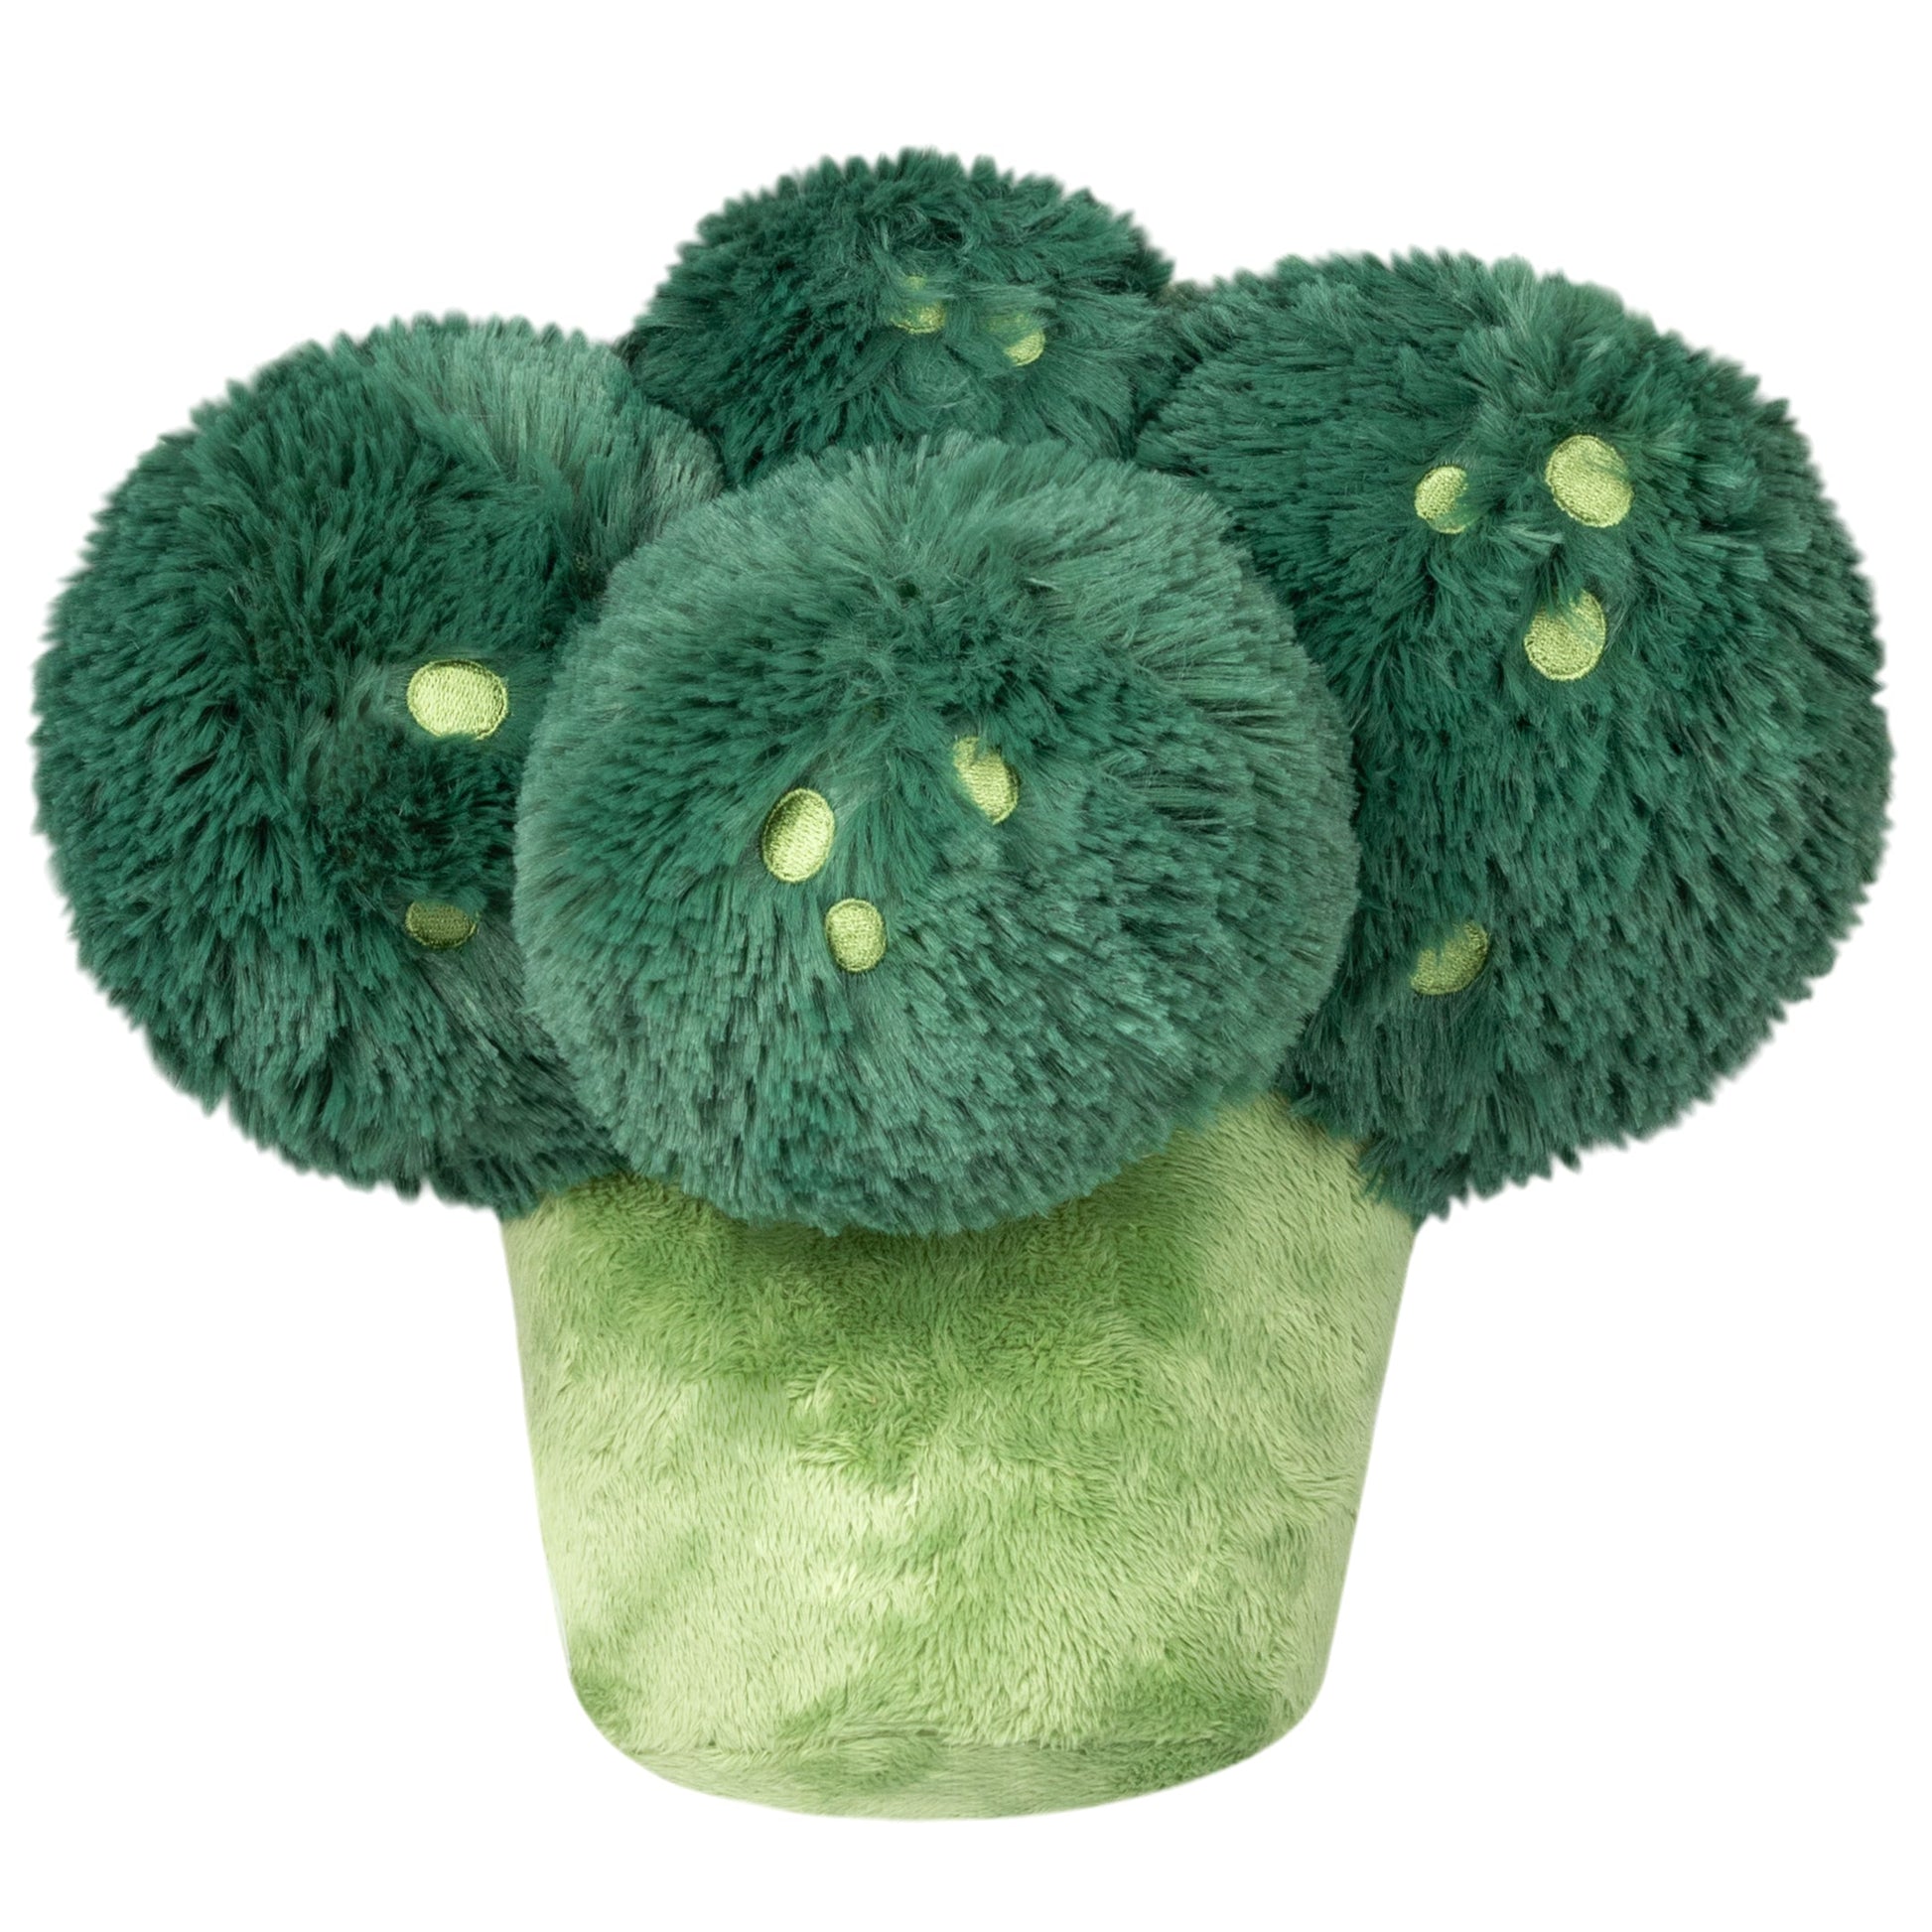 Mini Comfort Food Broccoli